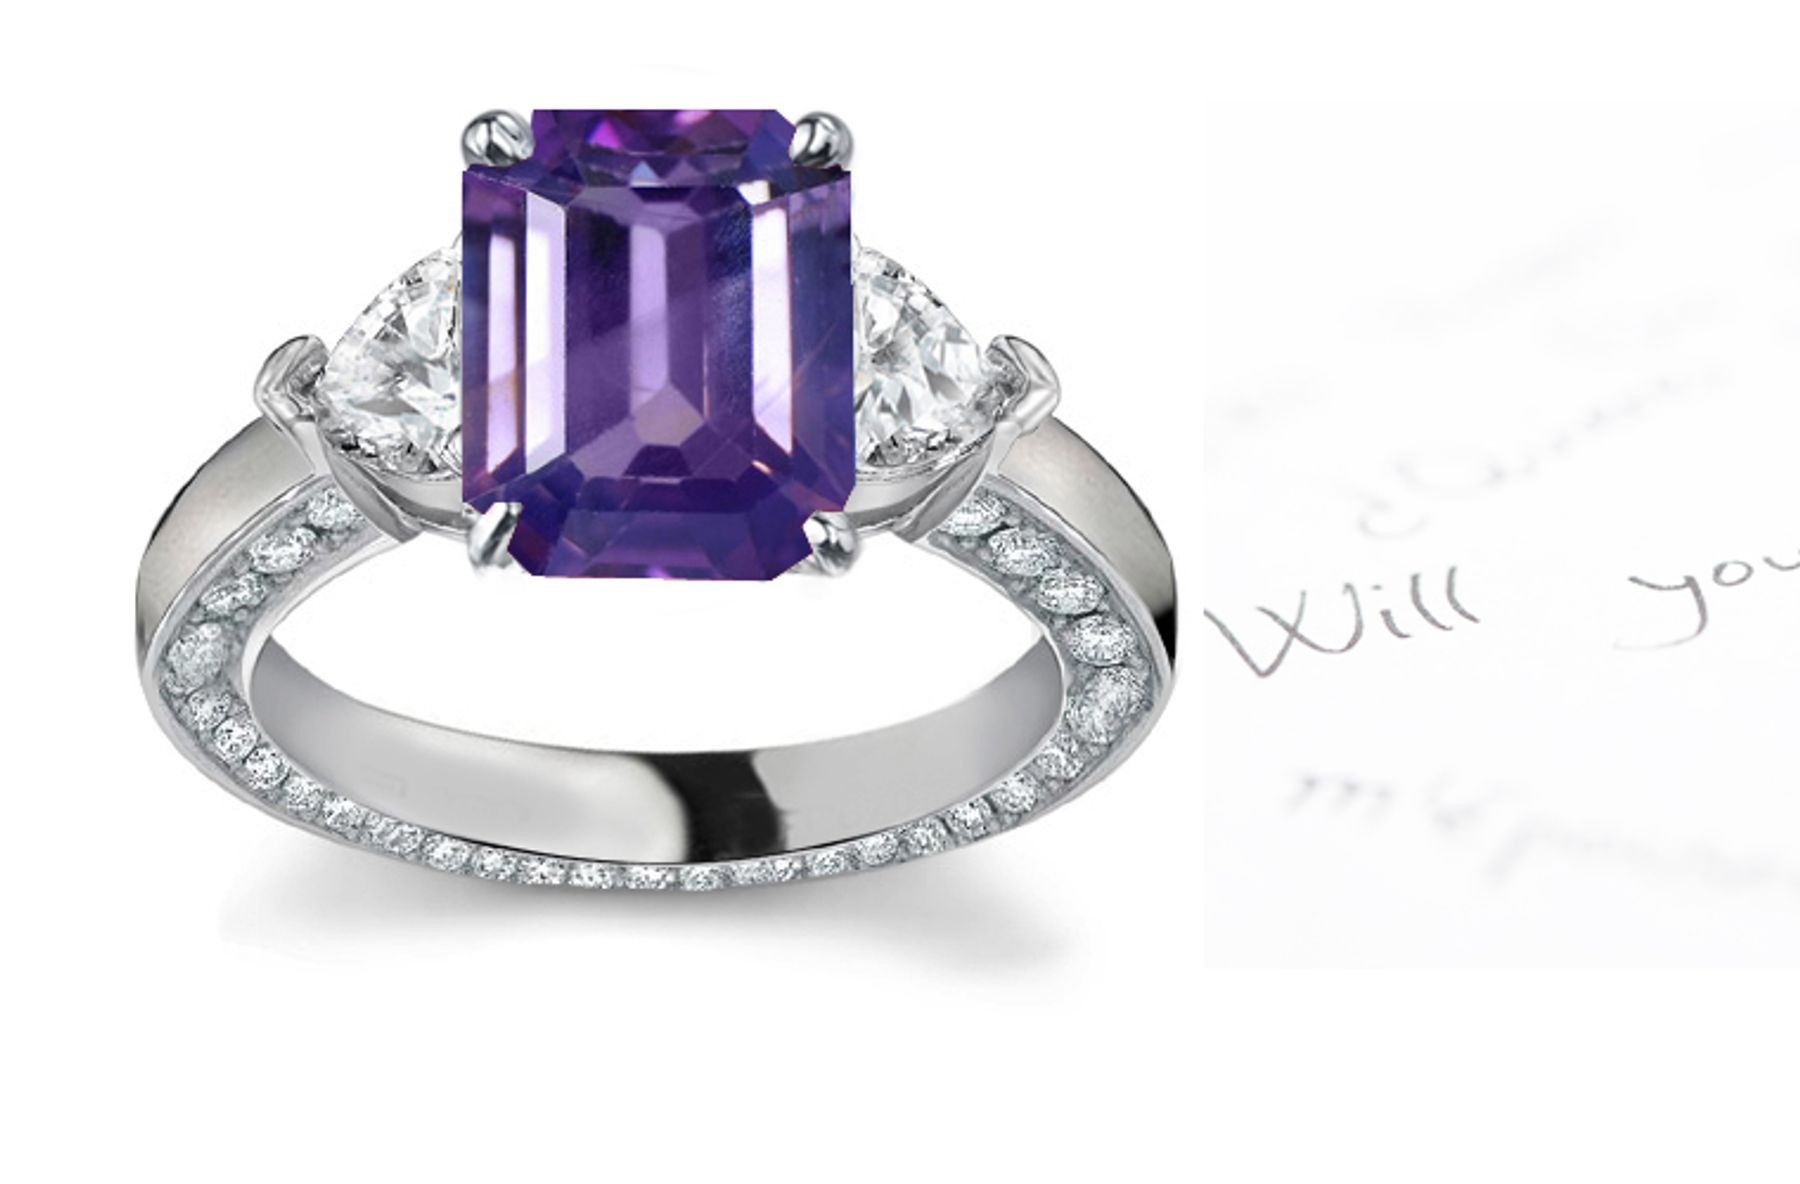 Unique Diamond & Very Popular Purple Sapphire Rings